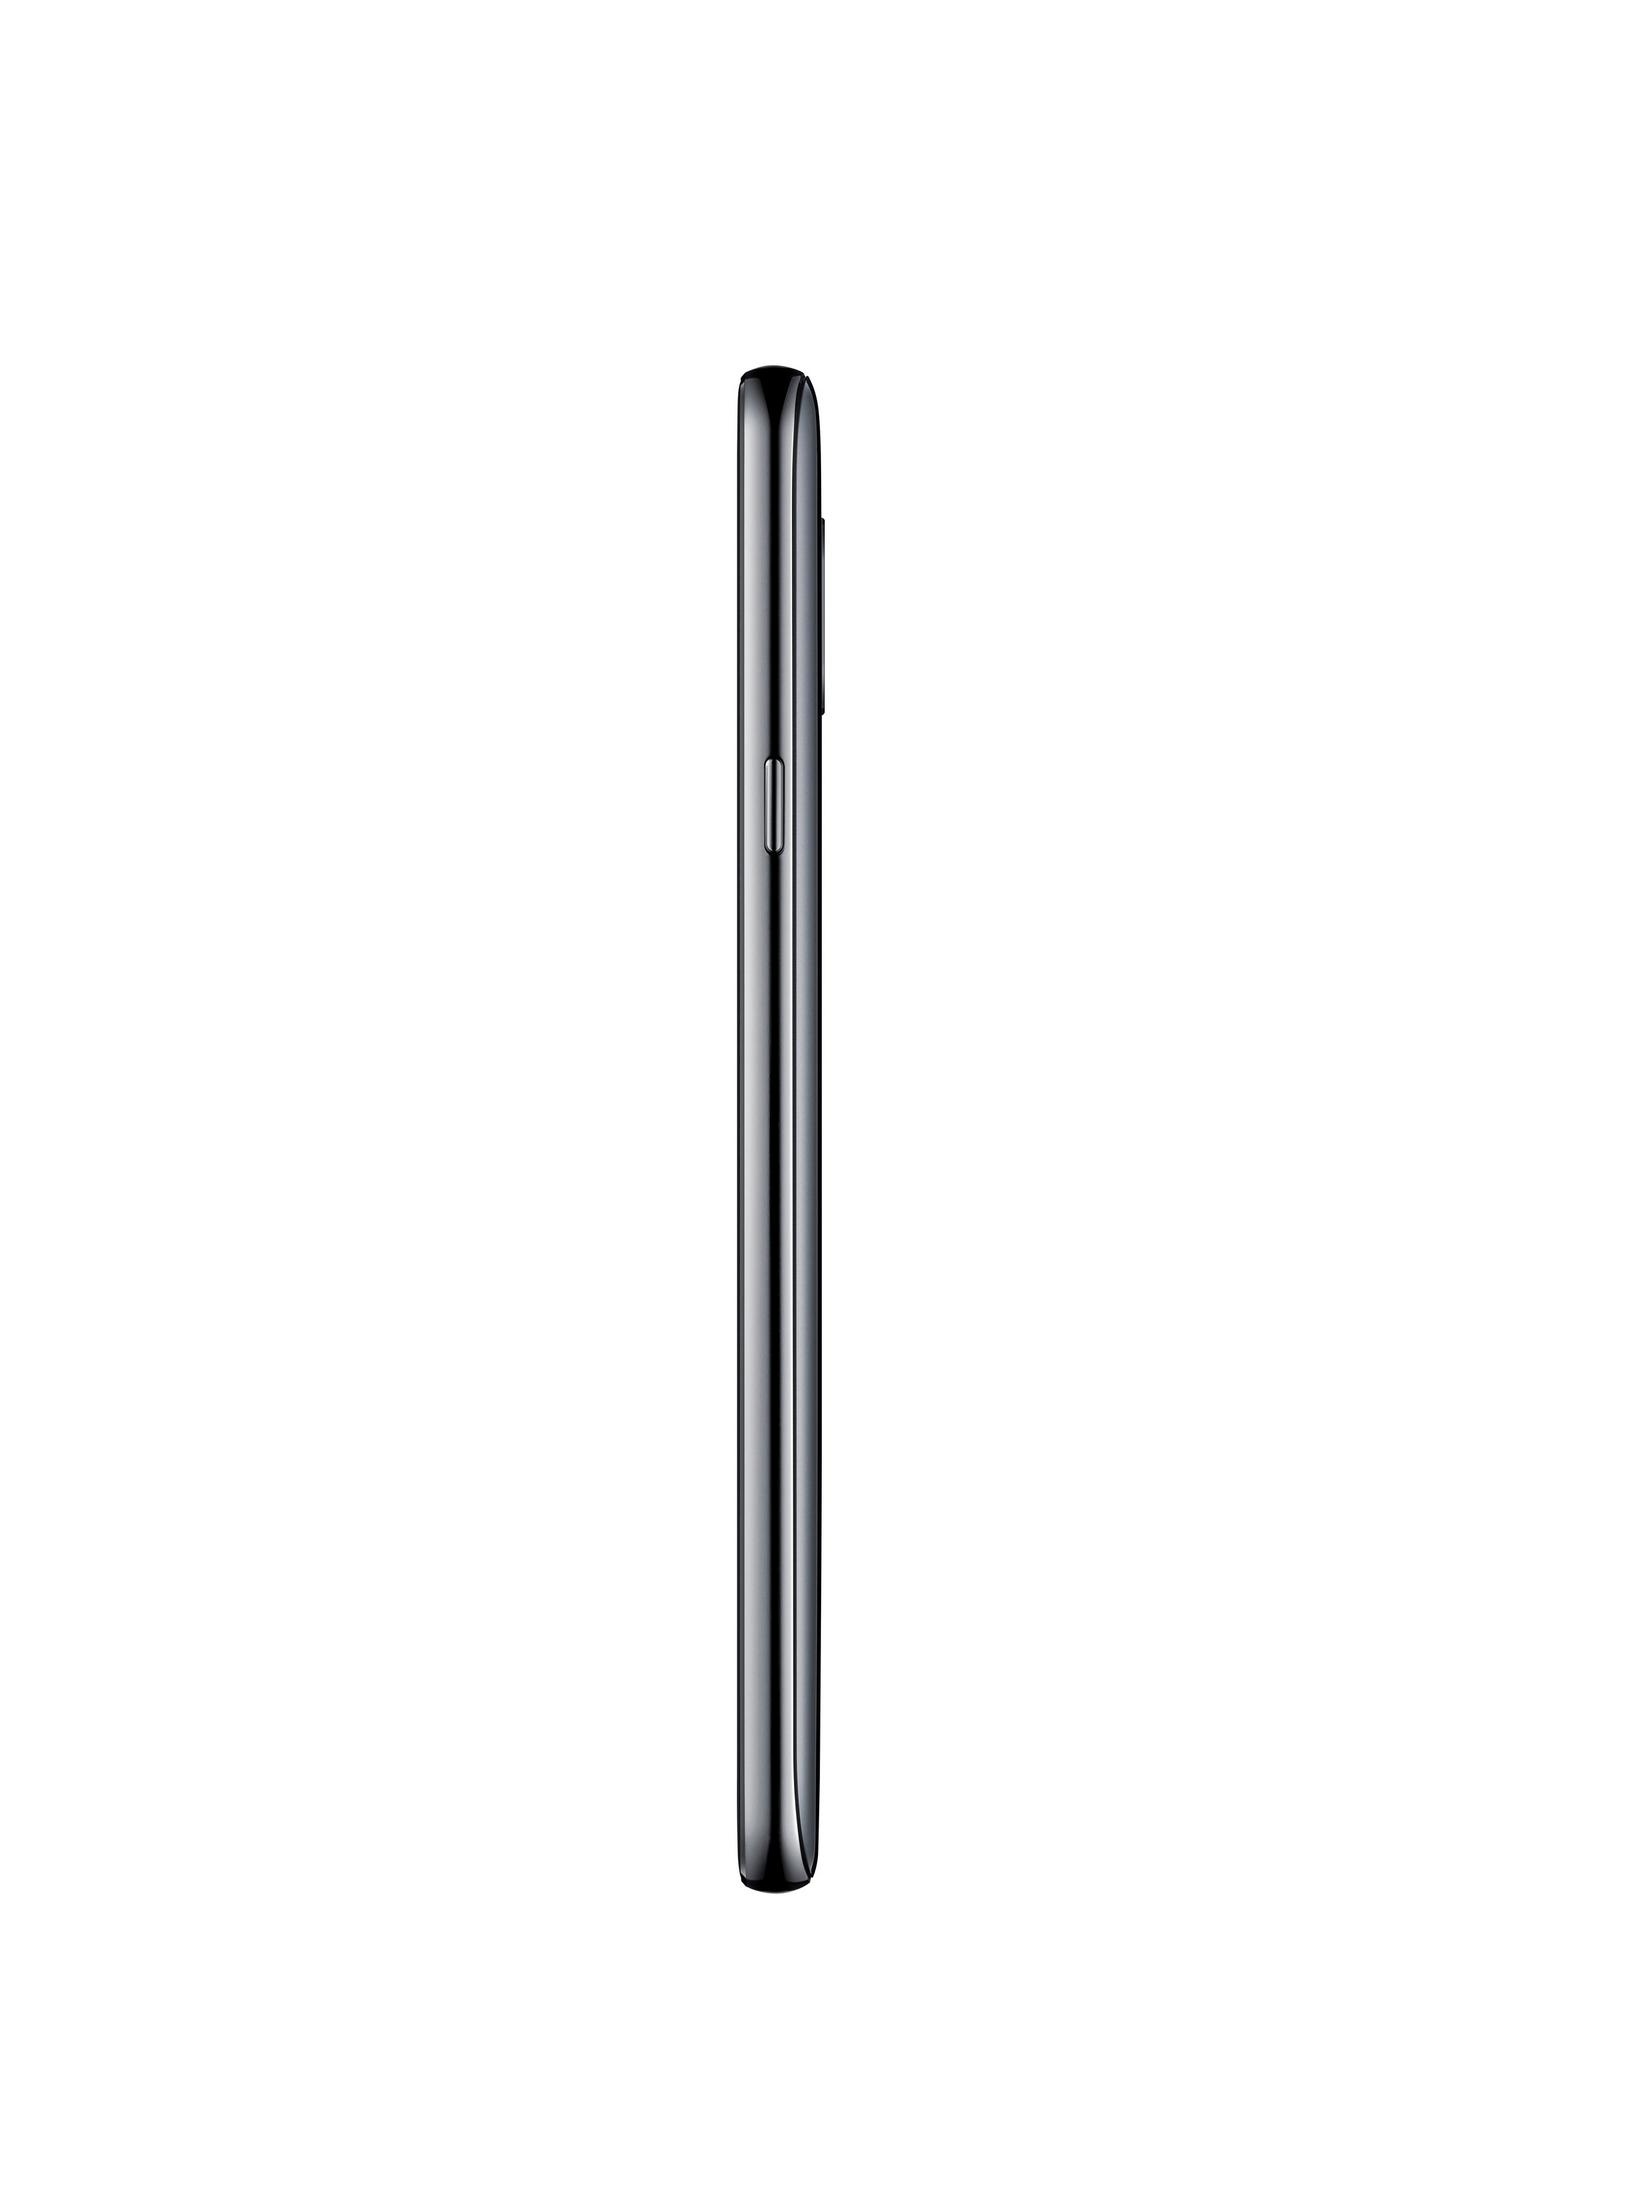 LG G7 THINQ GB 64 PLATINUM New Gray GREY Platinum